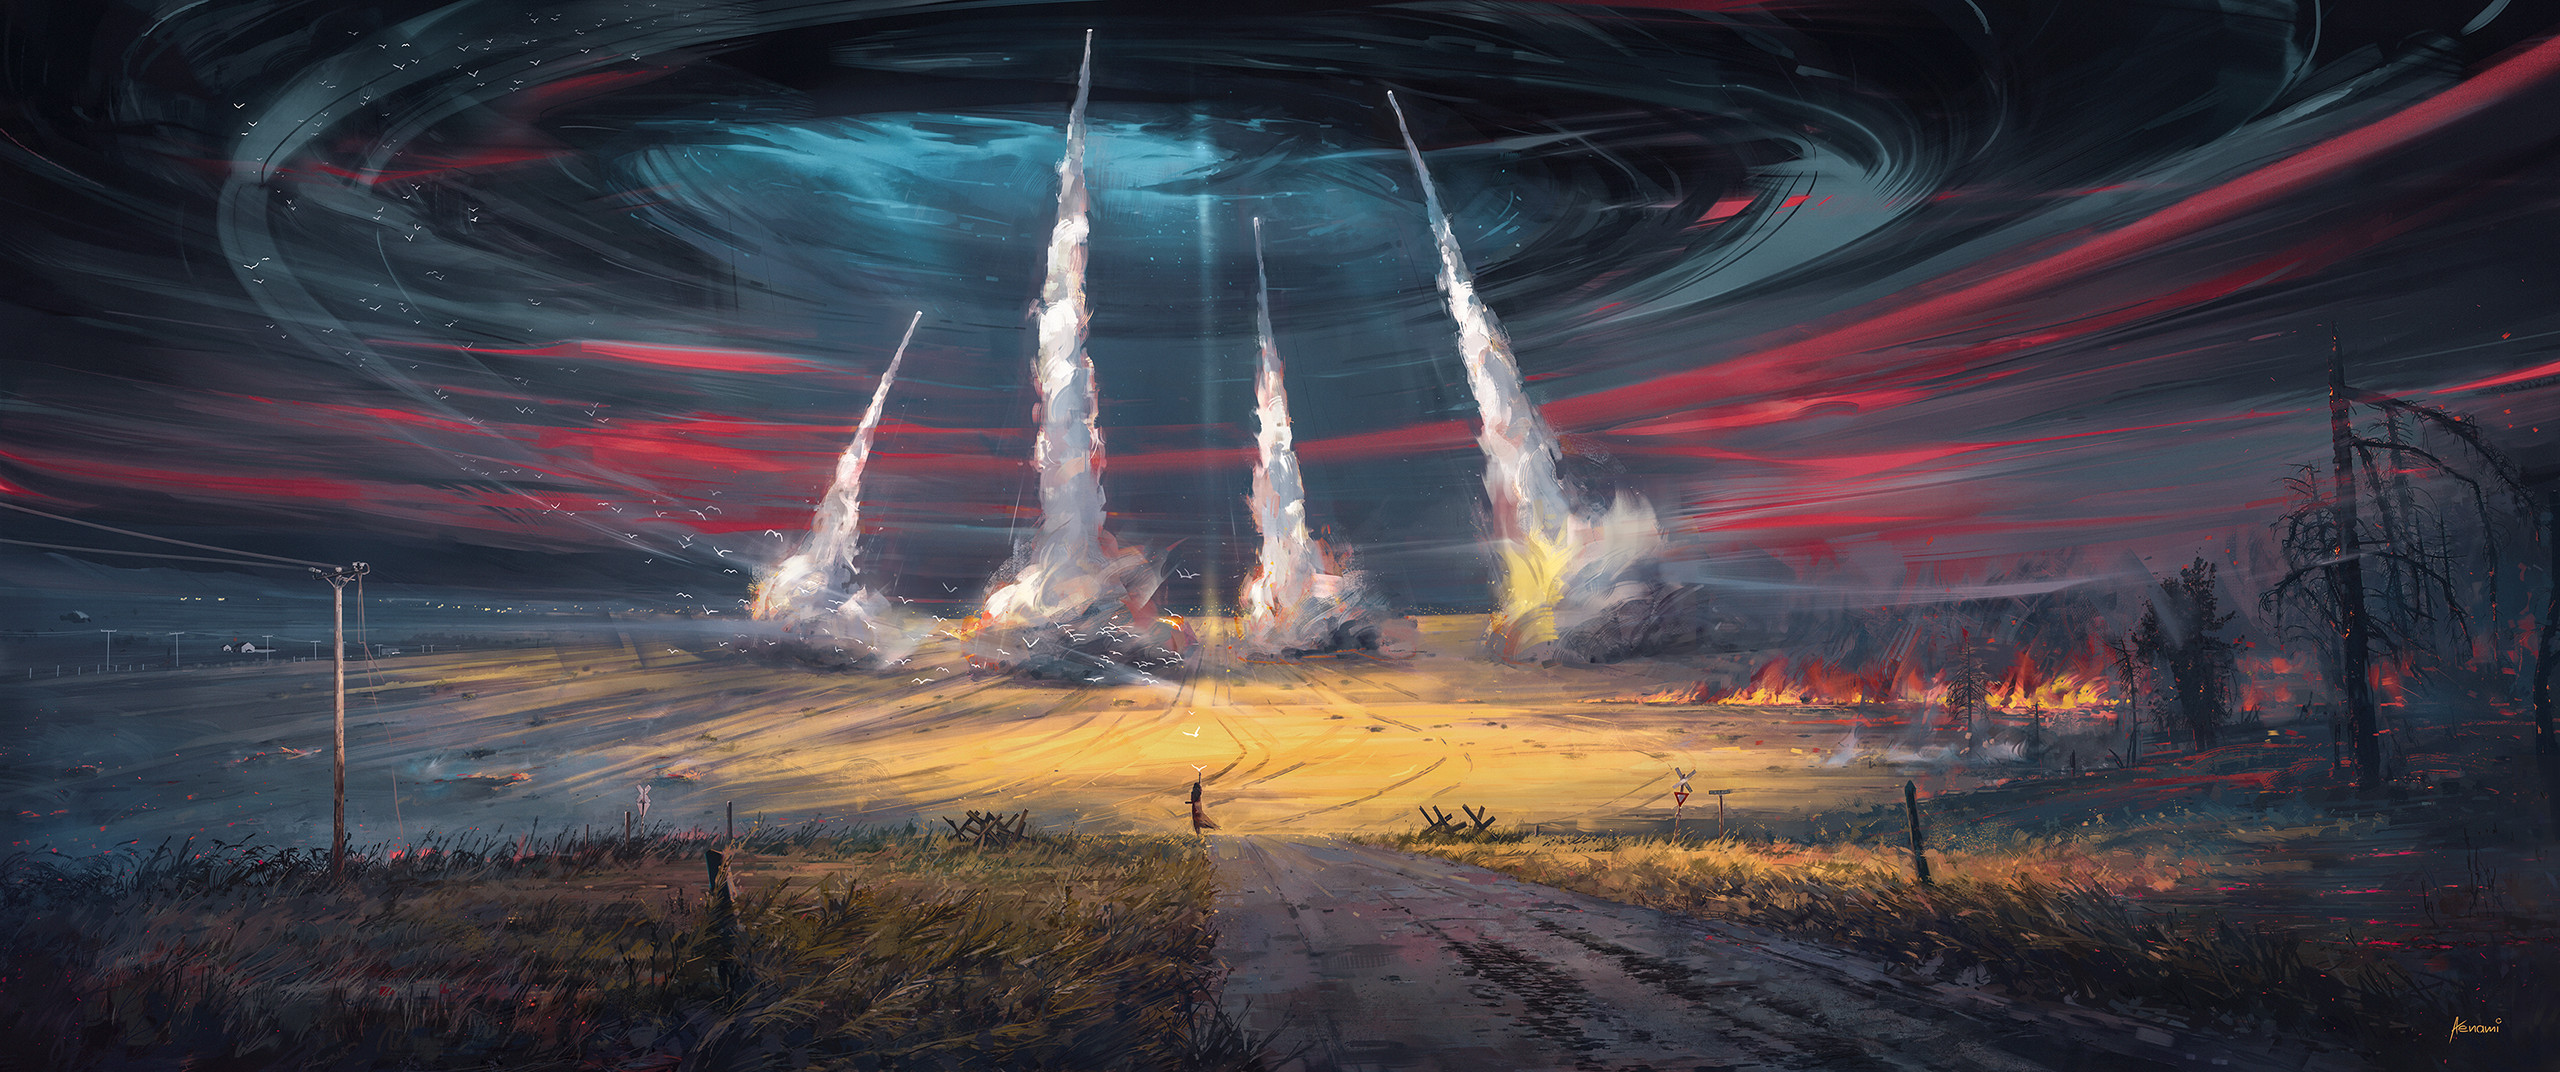 General 2560x1072 Aenami digital art artwork illustration landscape nature field missiles launching smoke birds fire watermarked